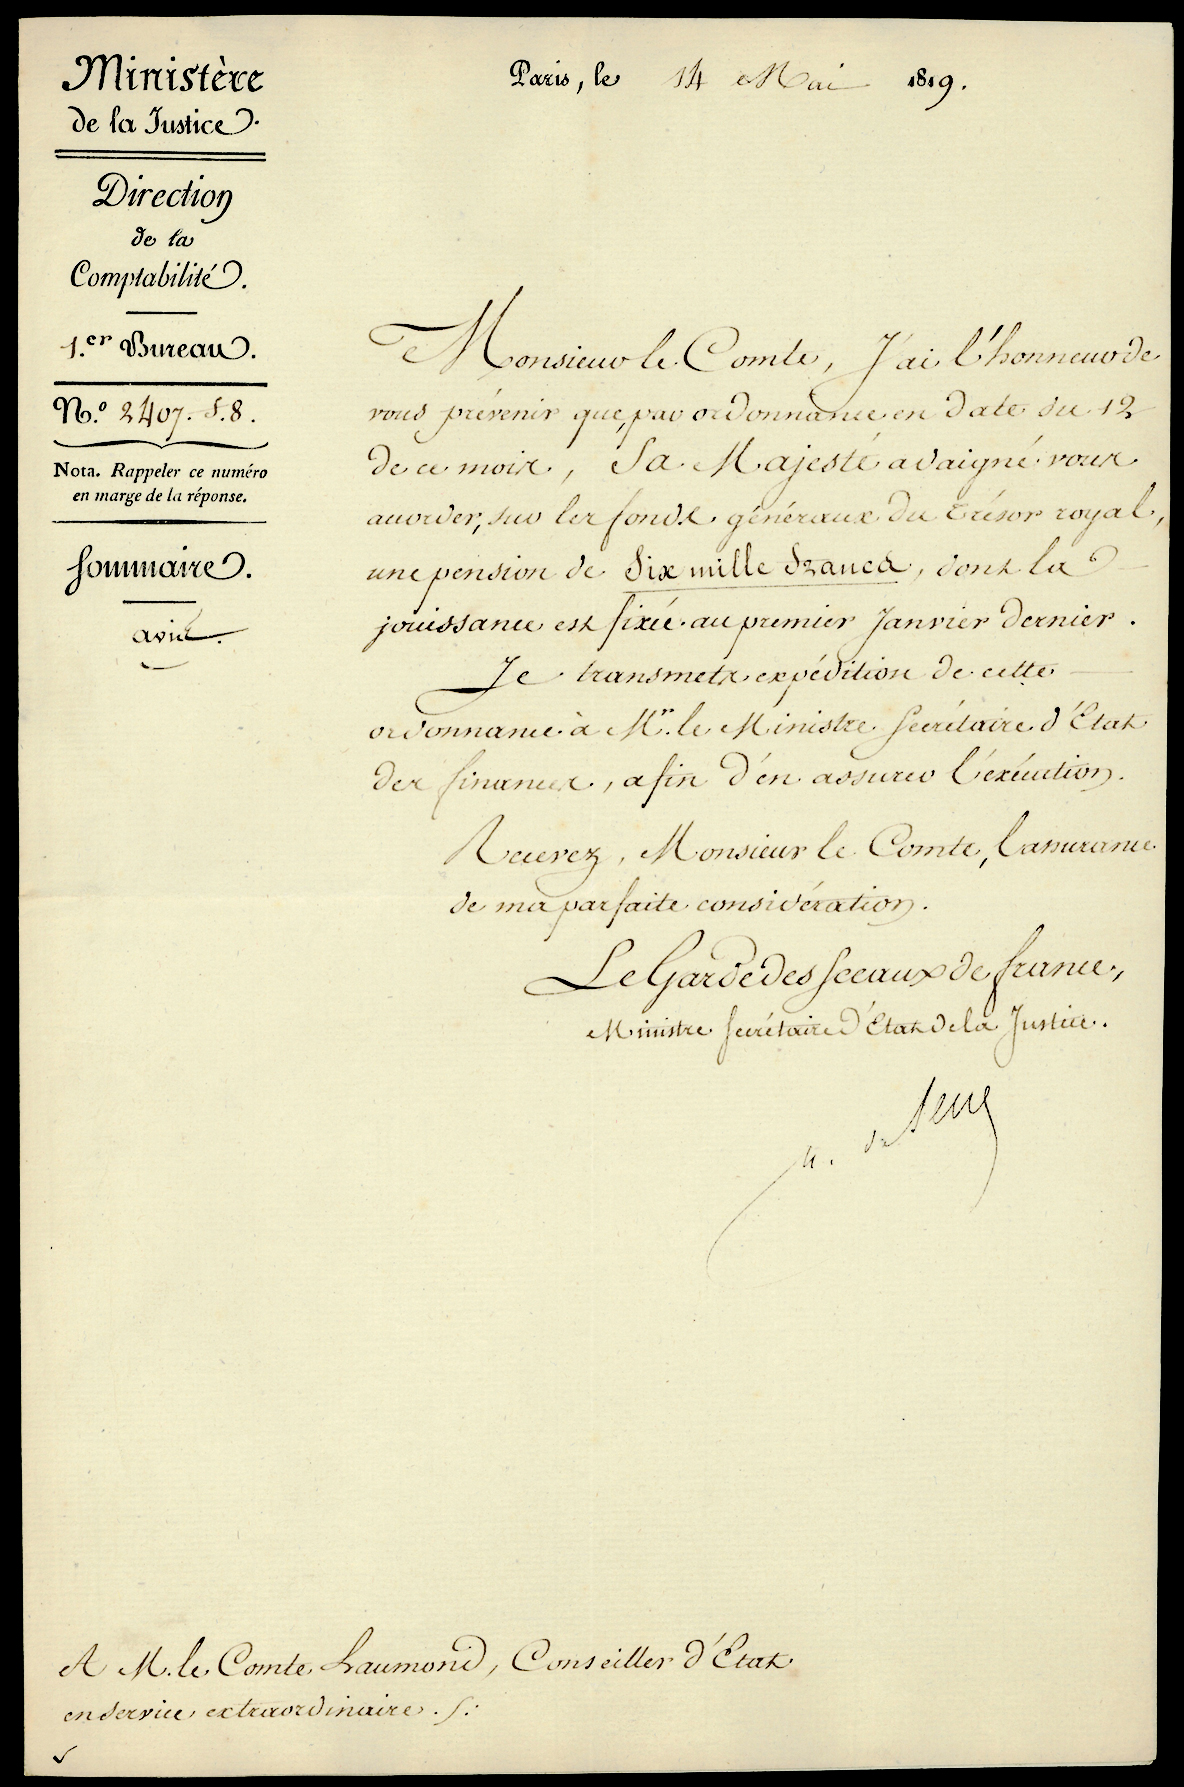 Referenz: serre-hercule-pierre-de-comte-ministre-d-etat-de-la-justice-1818-21